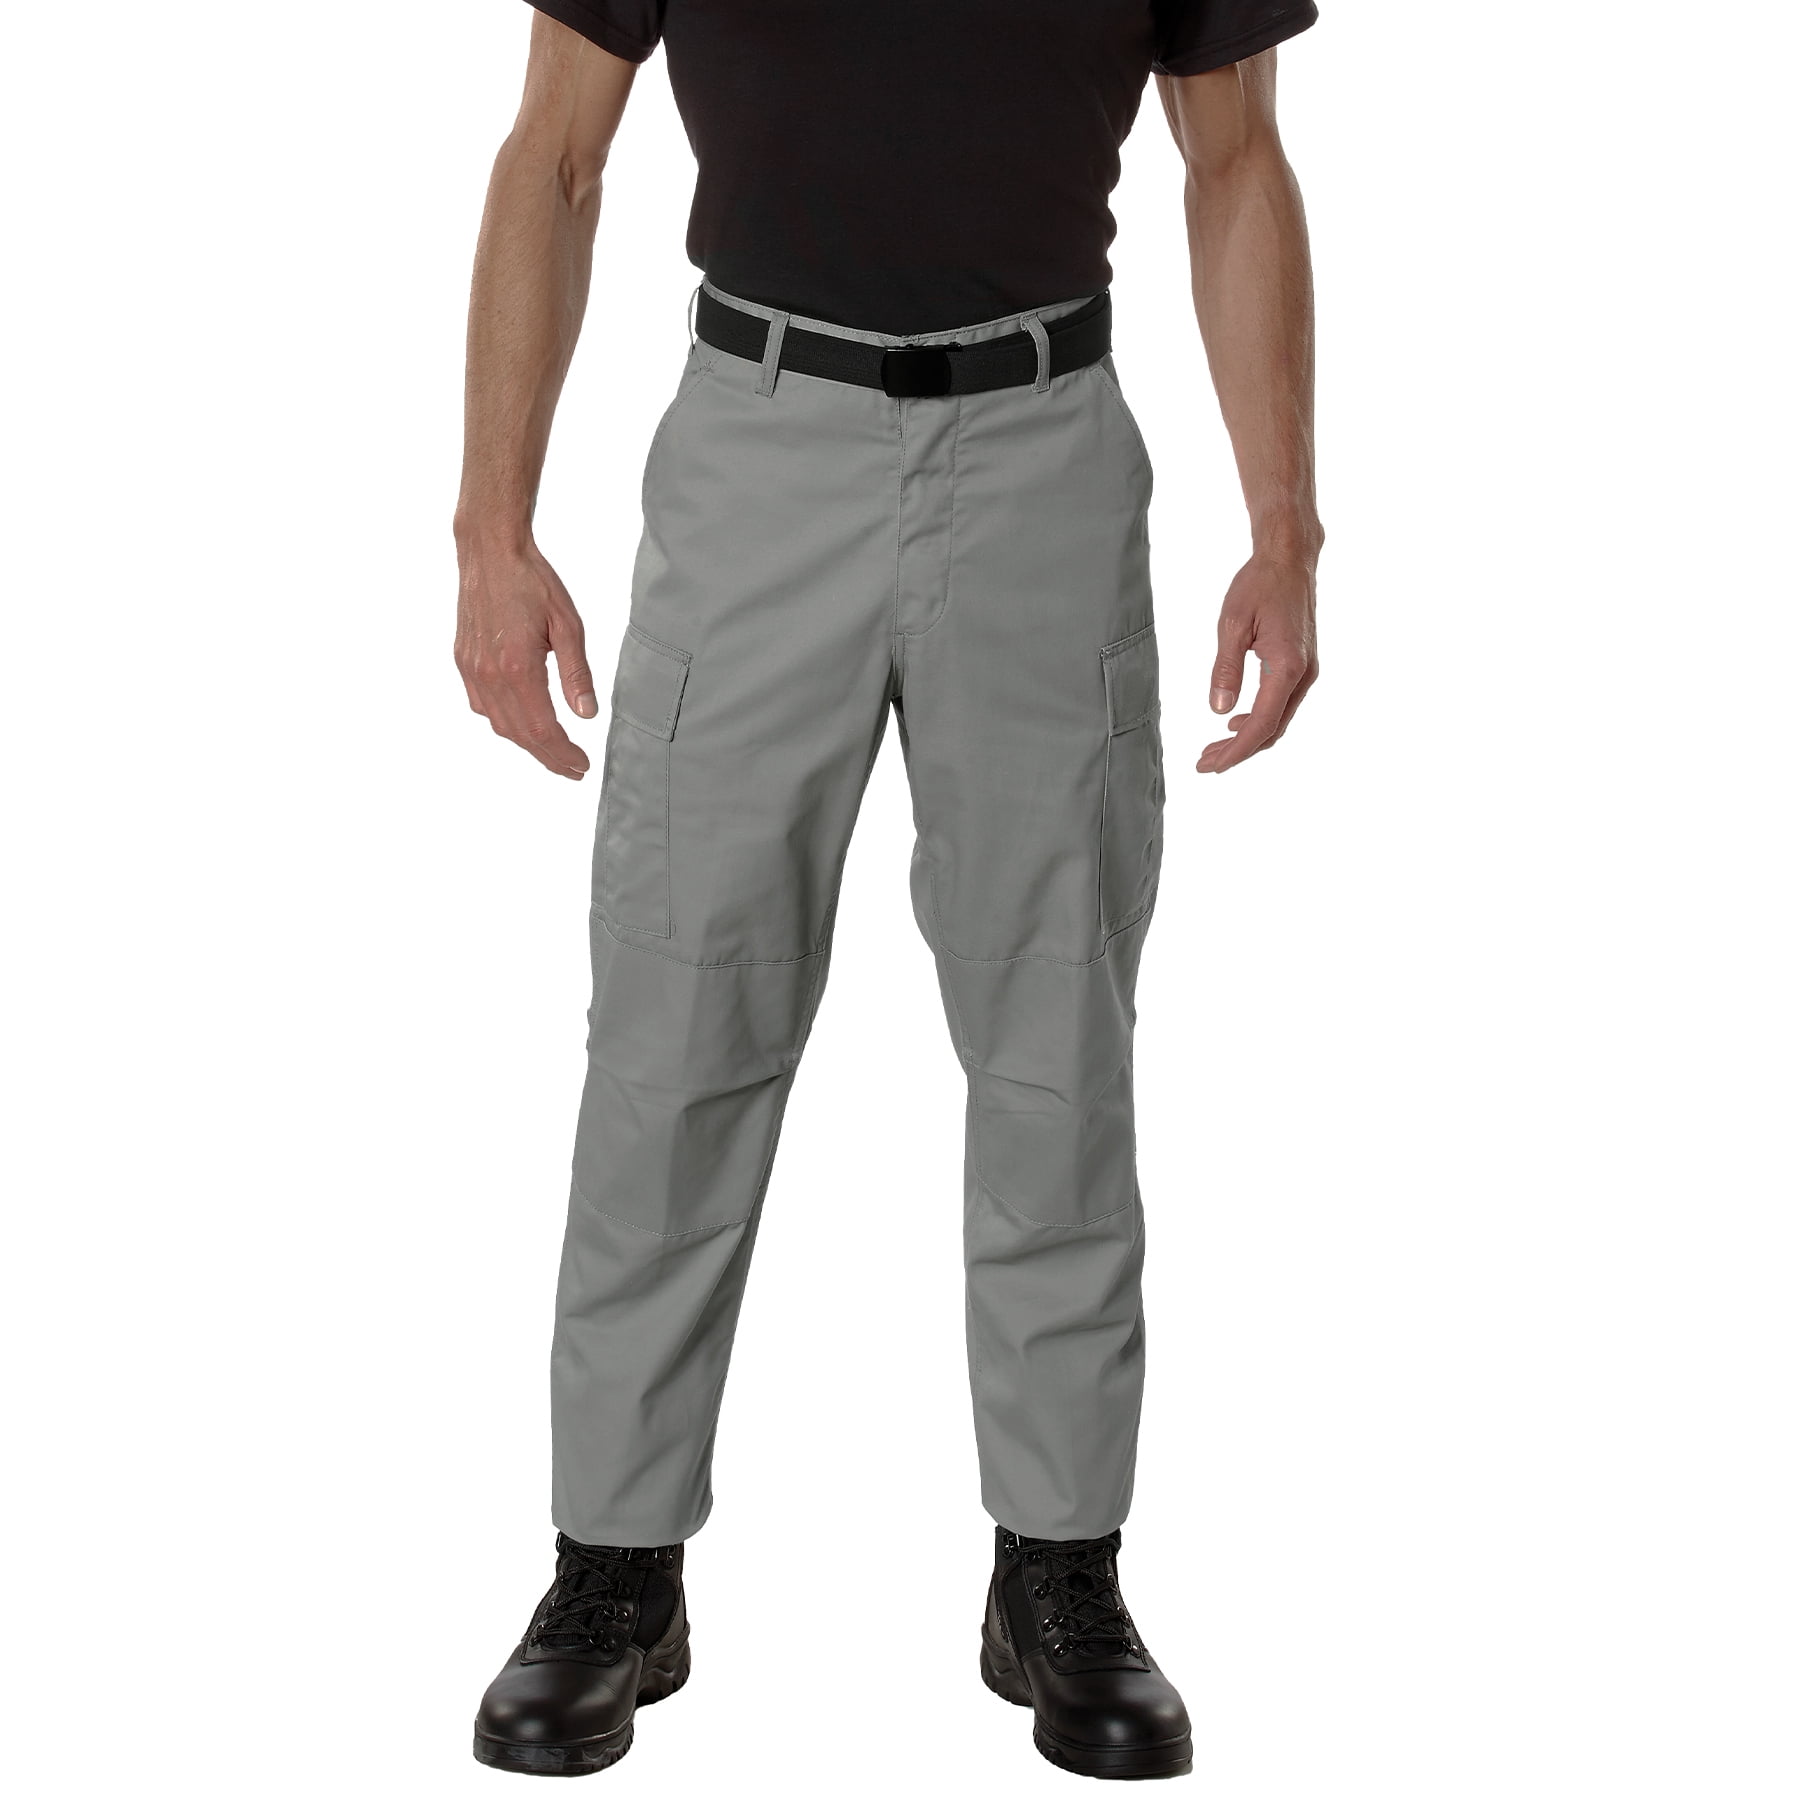 Rothco BDU Cargo Pants,Grey,XS - Walmart.com